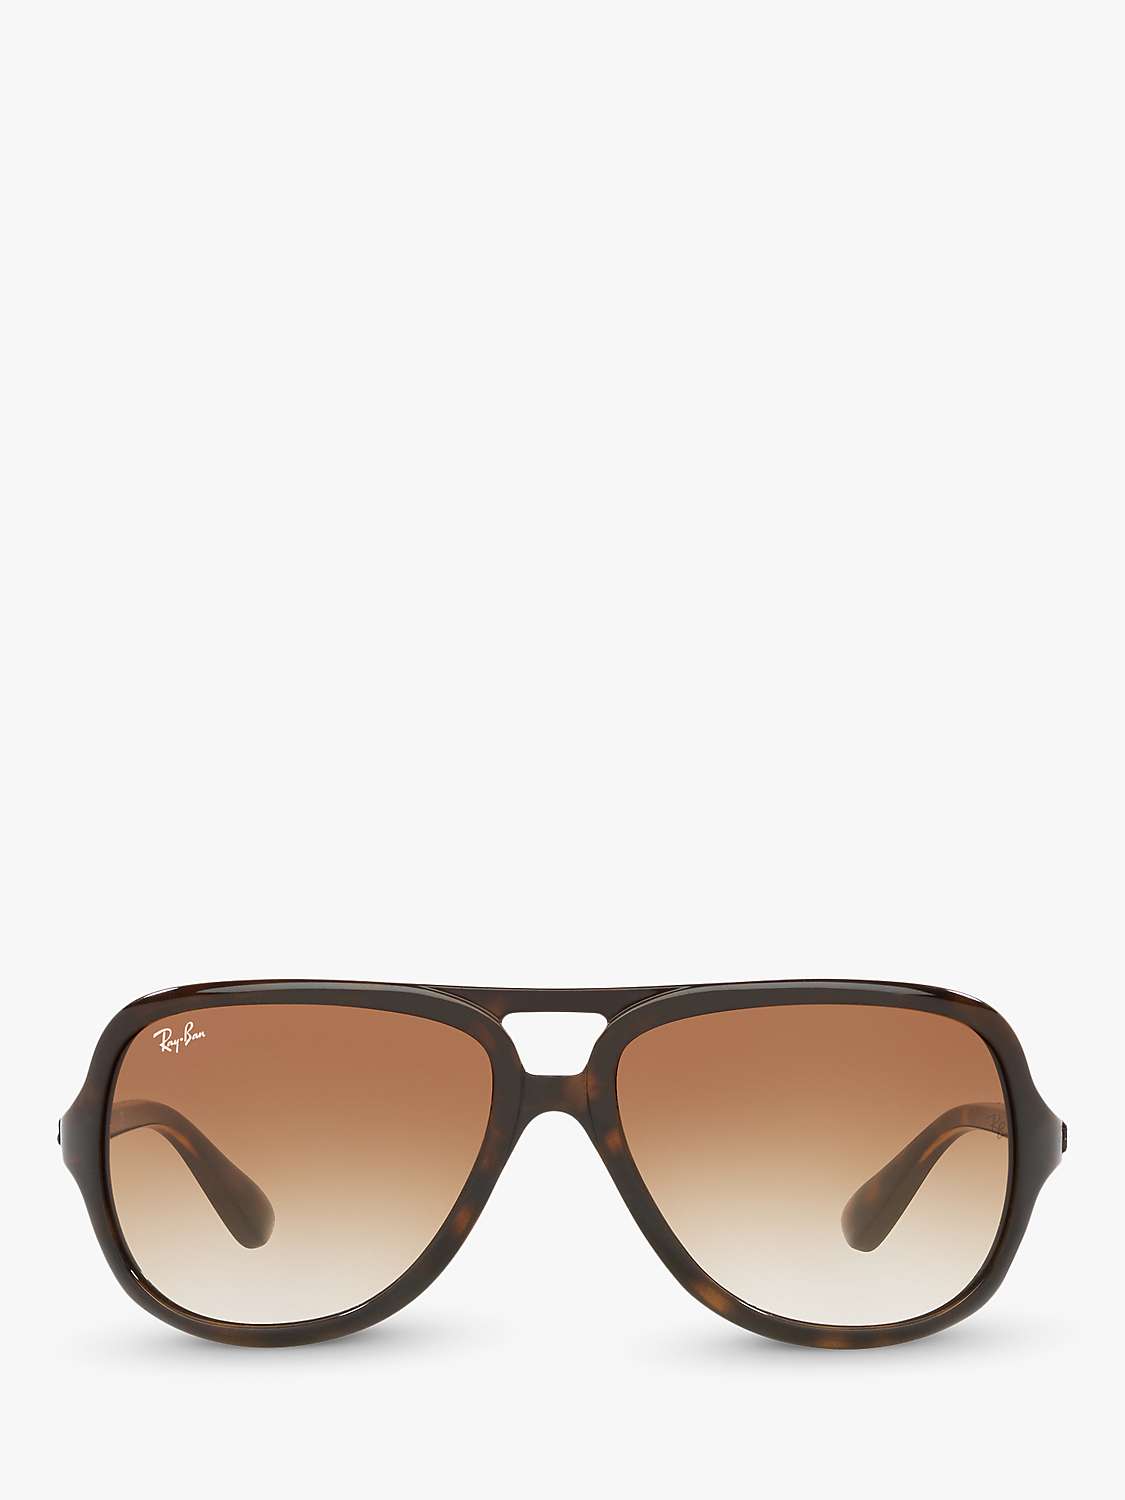 Buy Ray-Ban RB4162 Men's Pilot Sunglasses, Light Havana/Brown Online at johnlewis.com